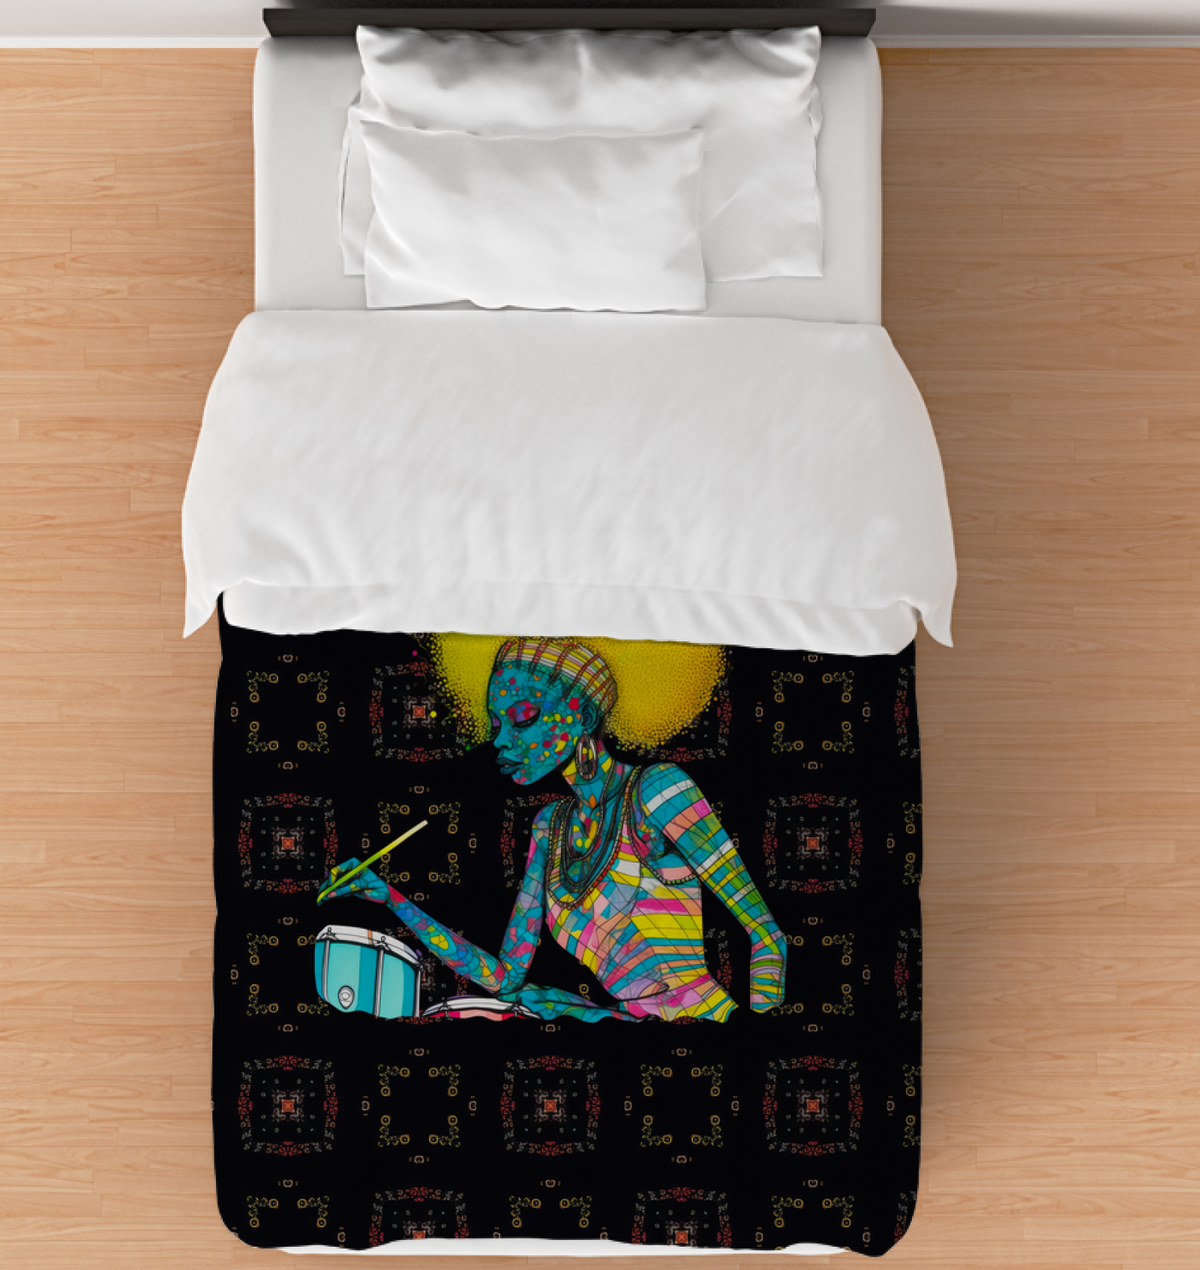 Meadow Serenity Comforter - Floral Print Bedding.